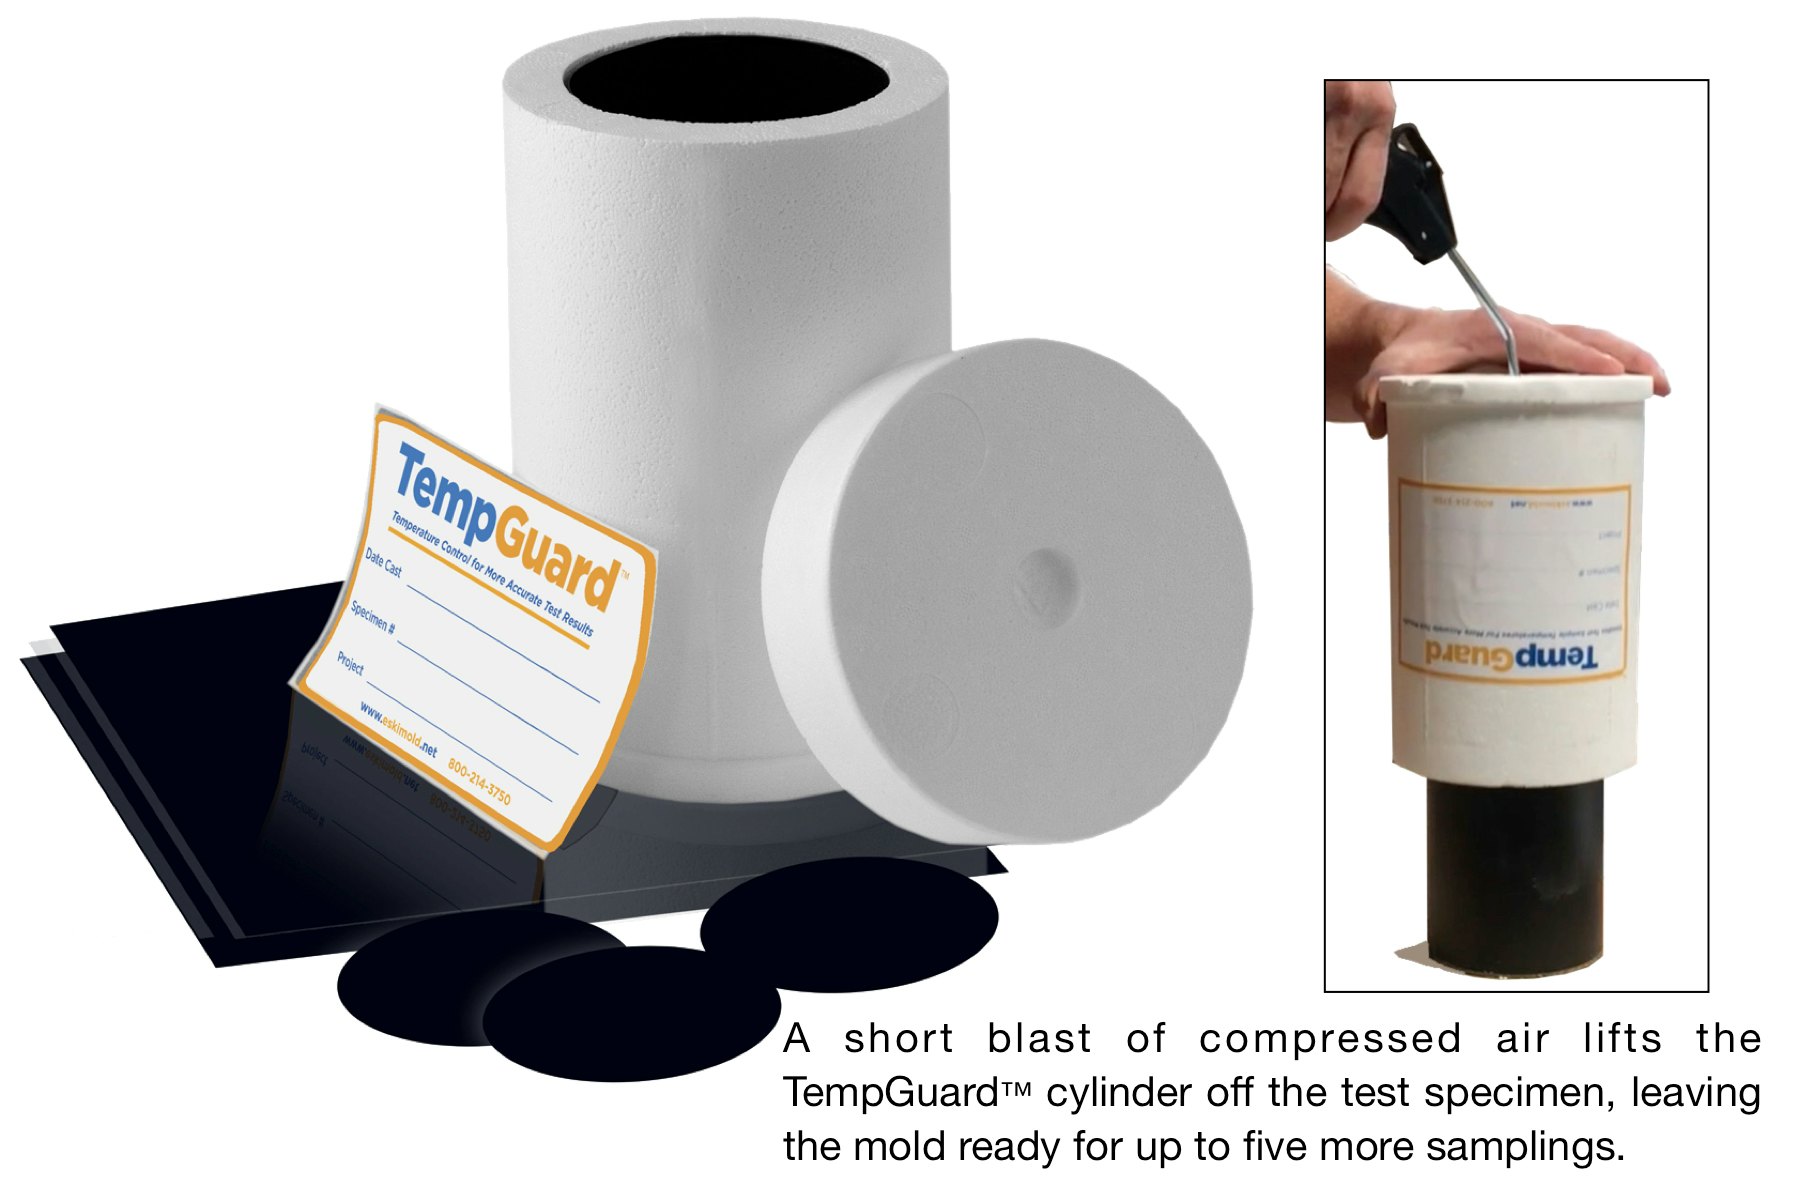 EPS- Styrofoam discs and cylinders